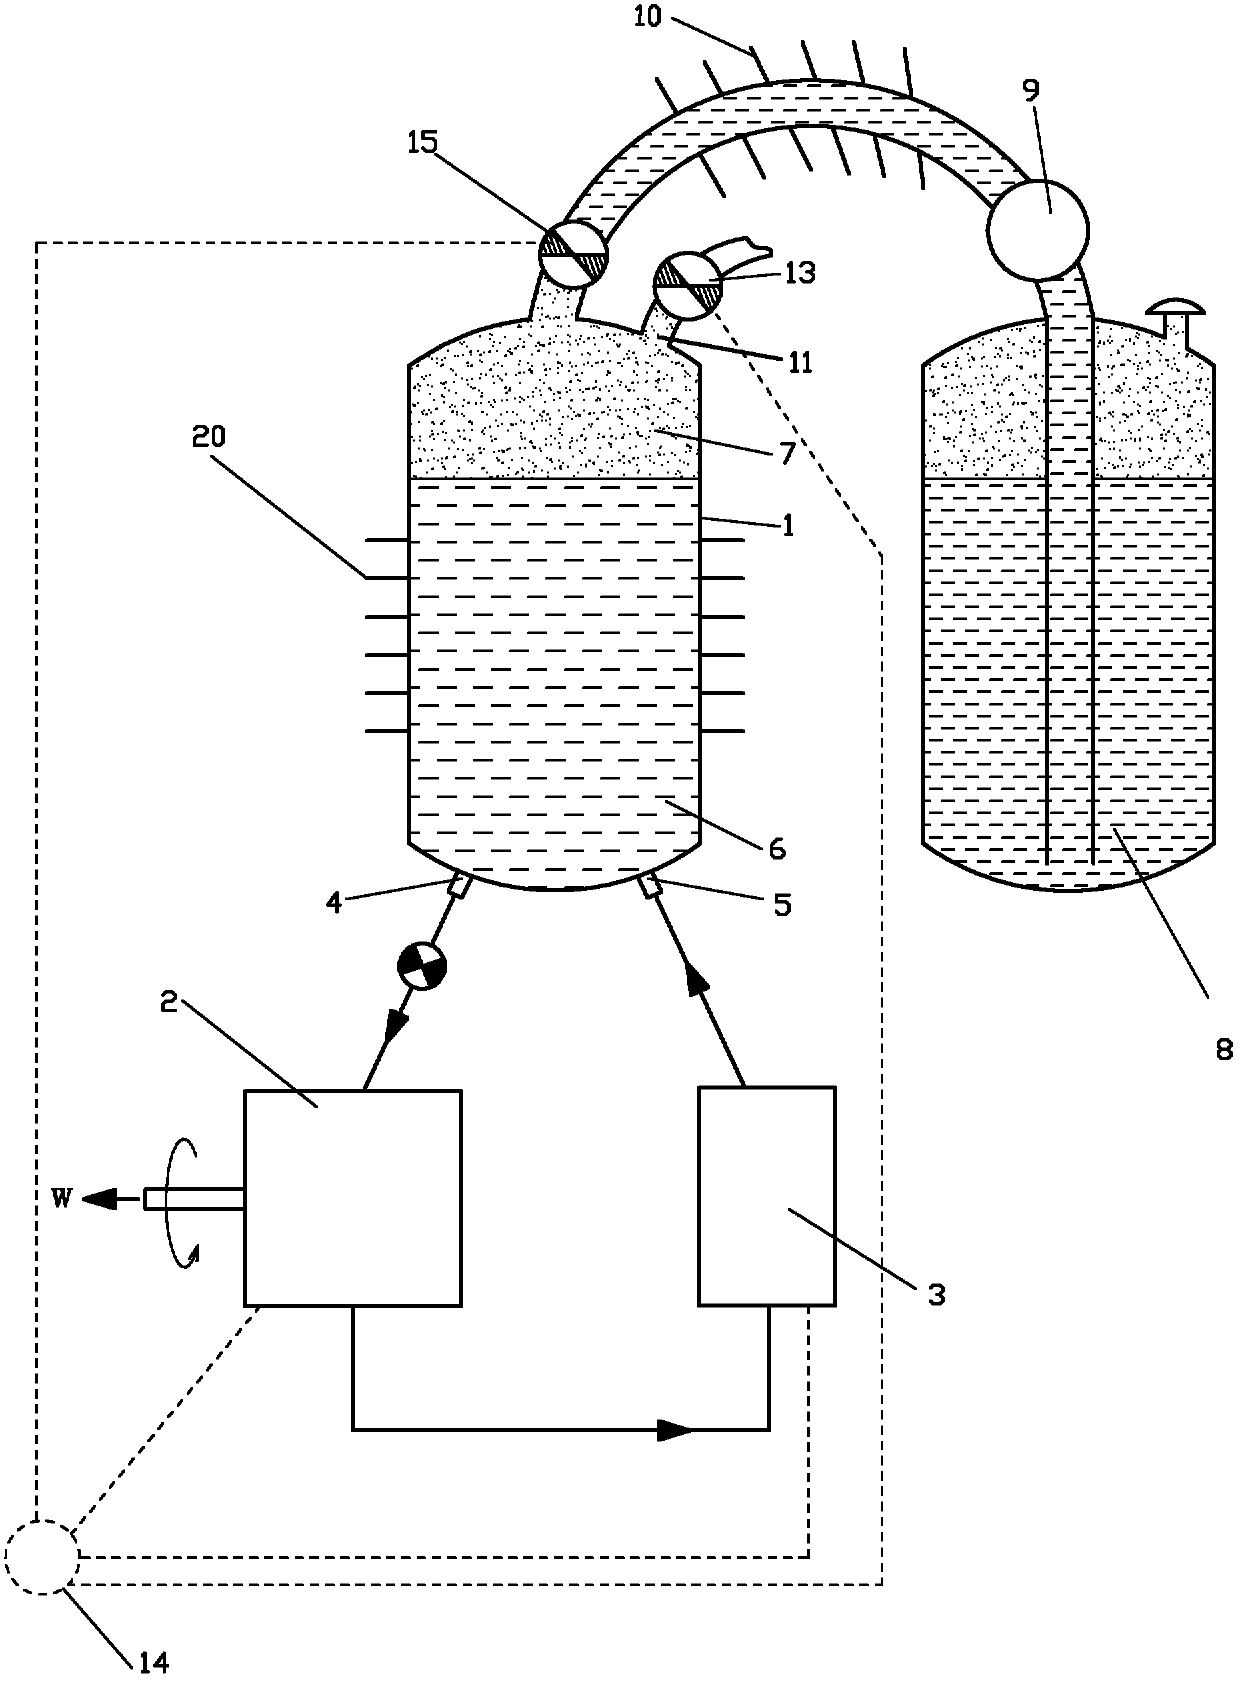 Liquid piston hydraulic-pneumatic engine